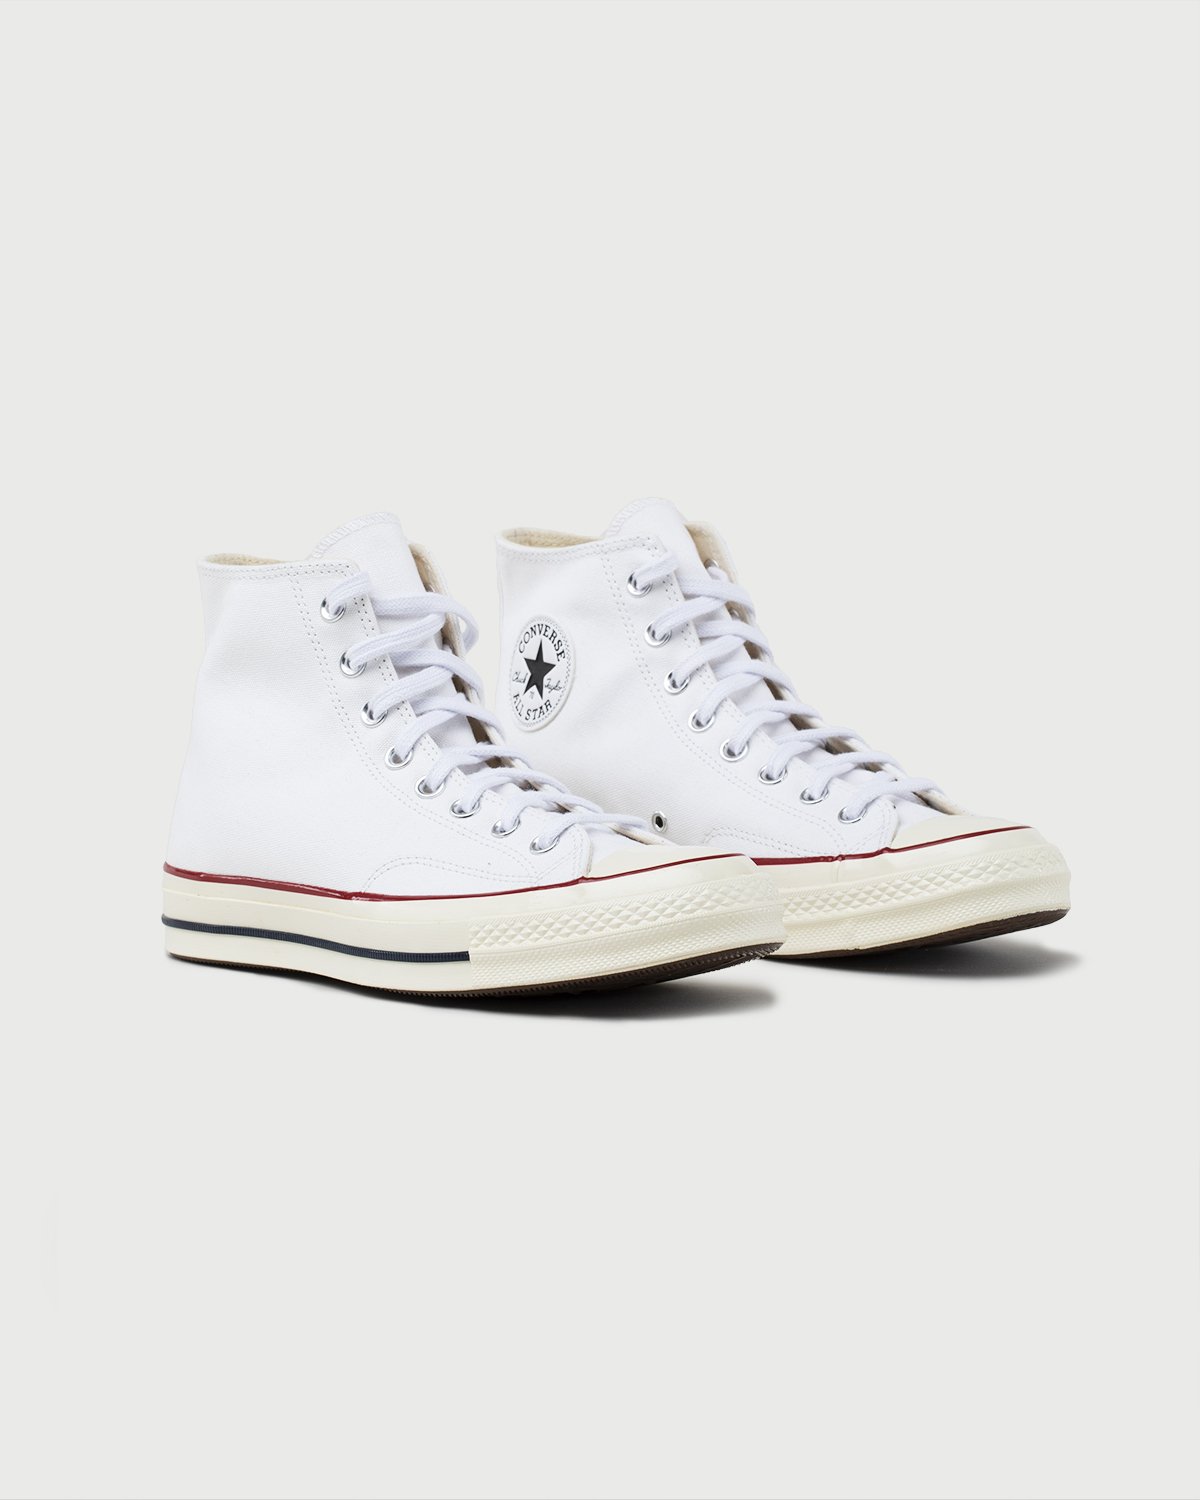 Converse - Chuck 70 Hi White - Footwear - White - Image 2